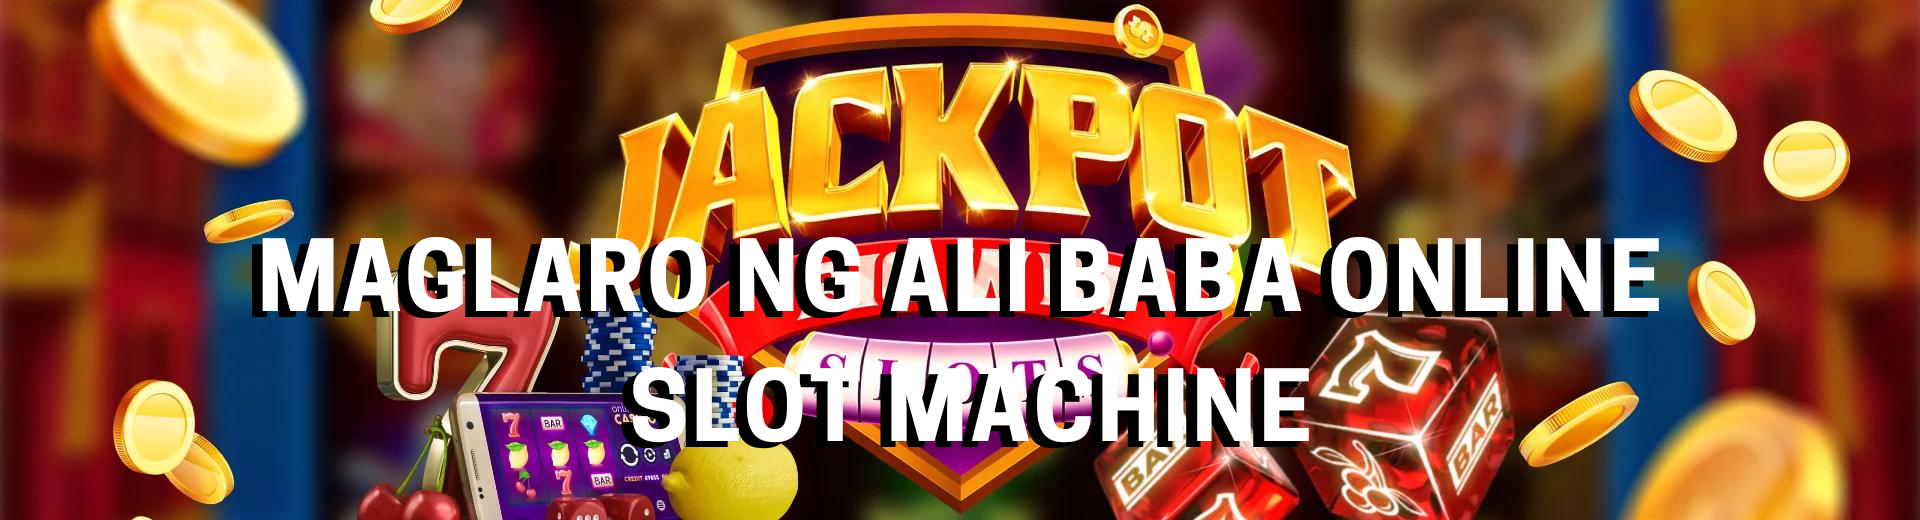 Maglaro ng Ali Baba Online Slot Machine 